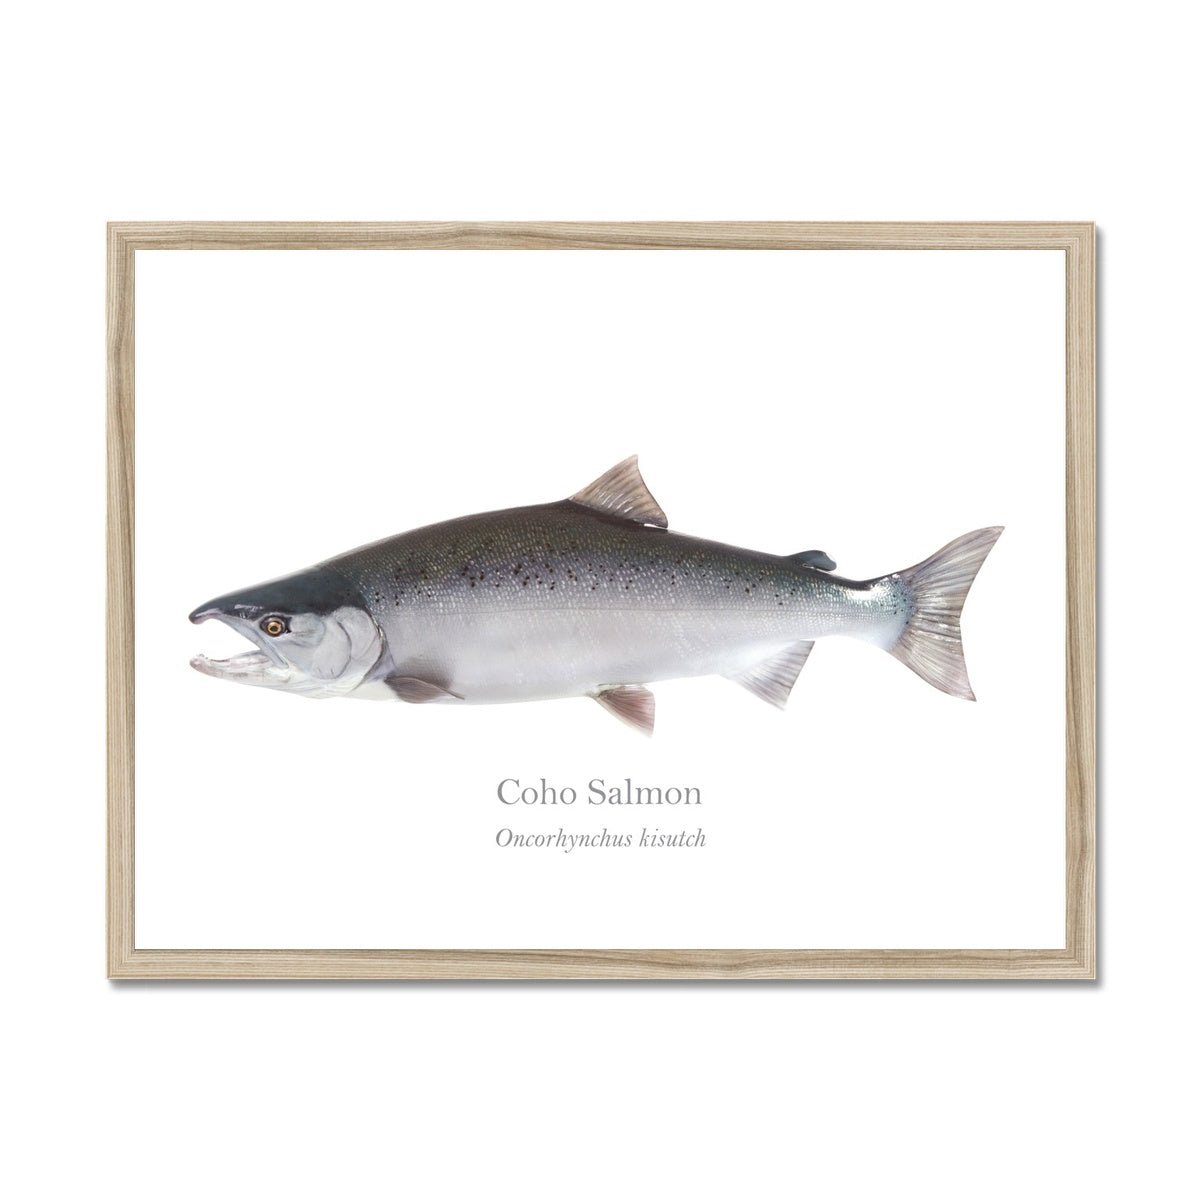 Coho Salmon - Framed Print - With Scientific Name - madfishlab.com